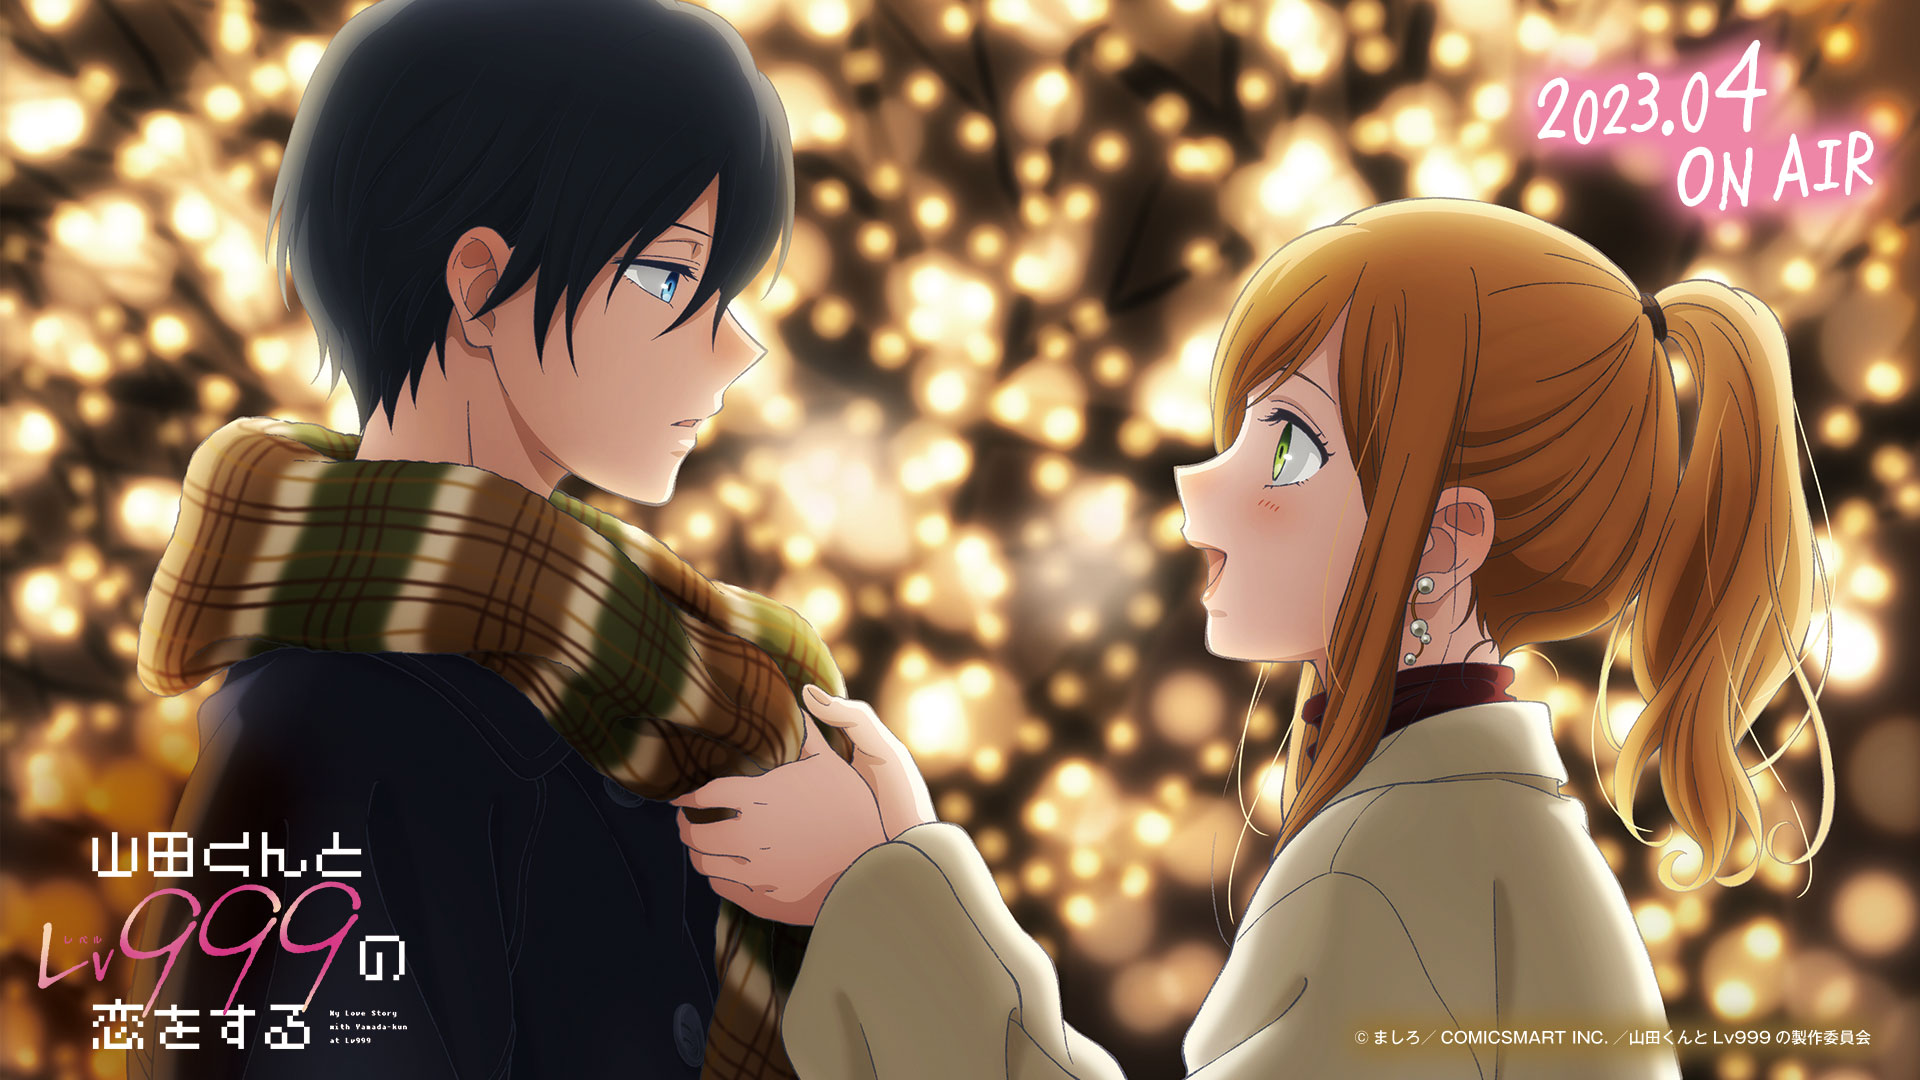 Loving Yamada at Lv999 - Christmas Anime Visual | April 2023 Premiere Date